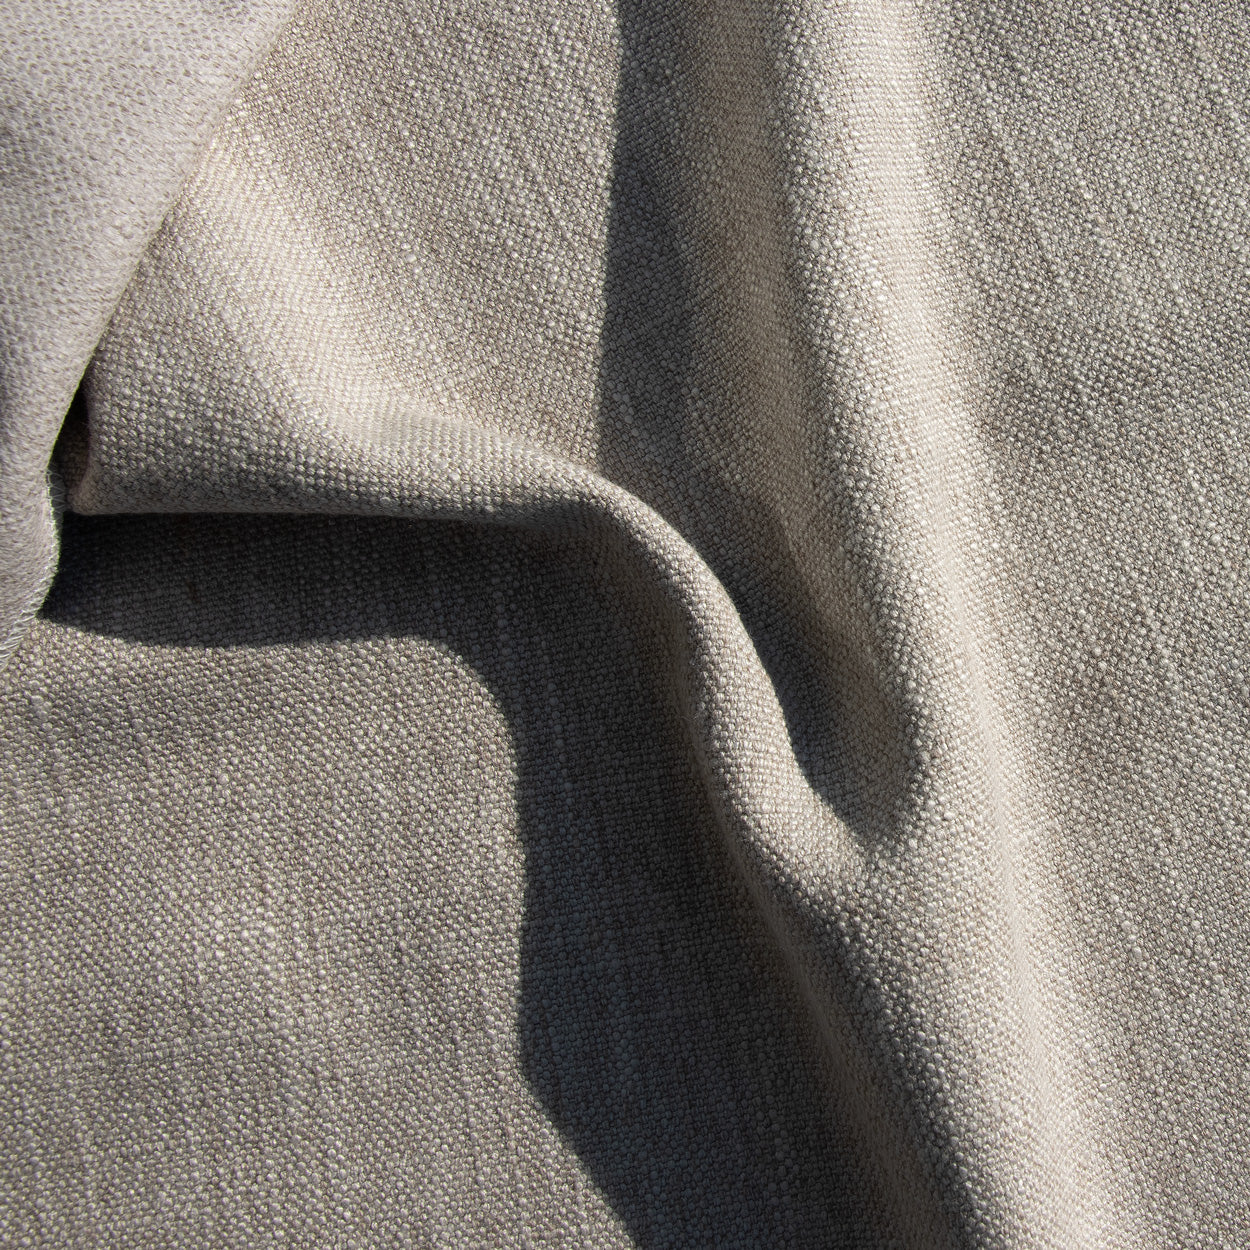 Fabrics Image